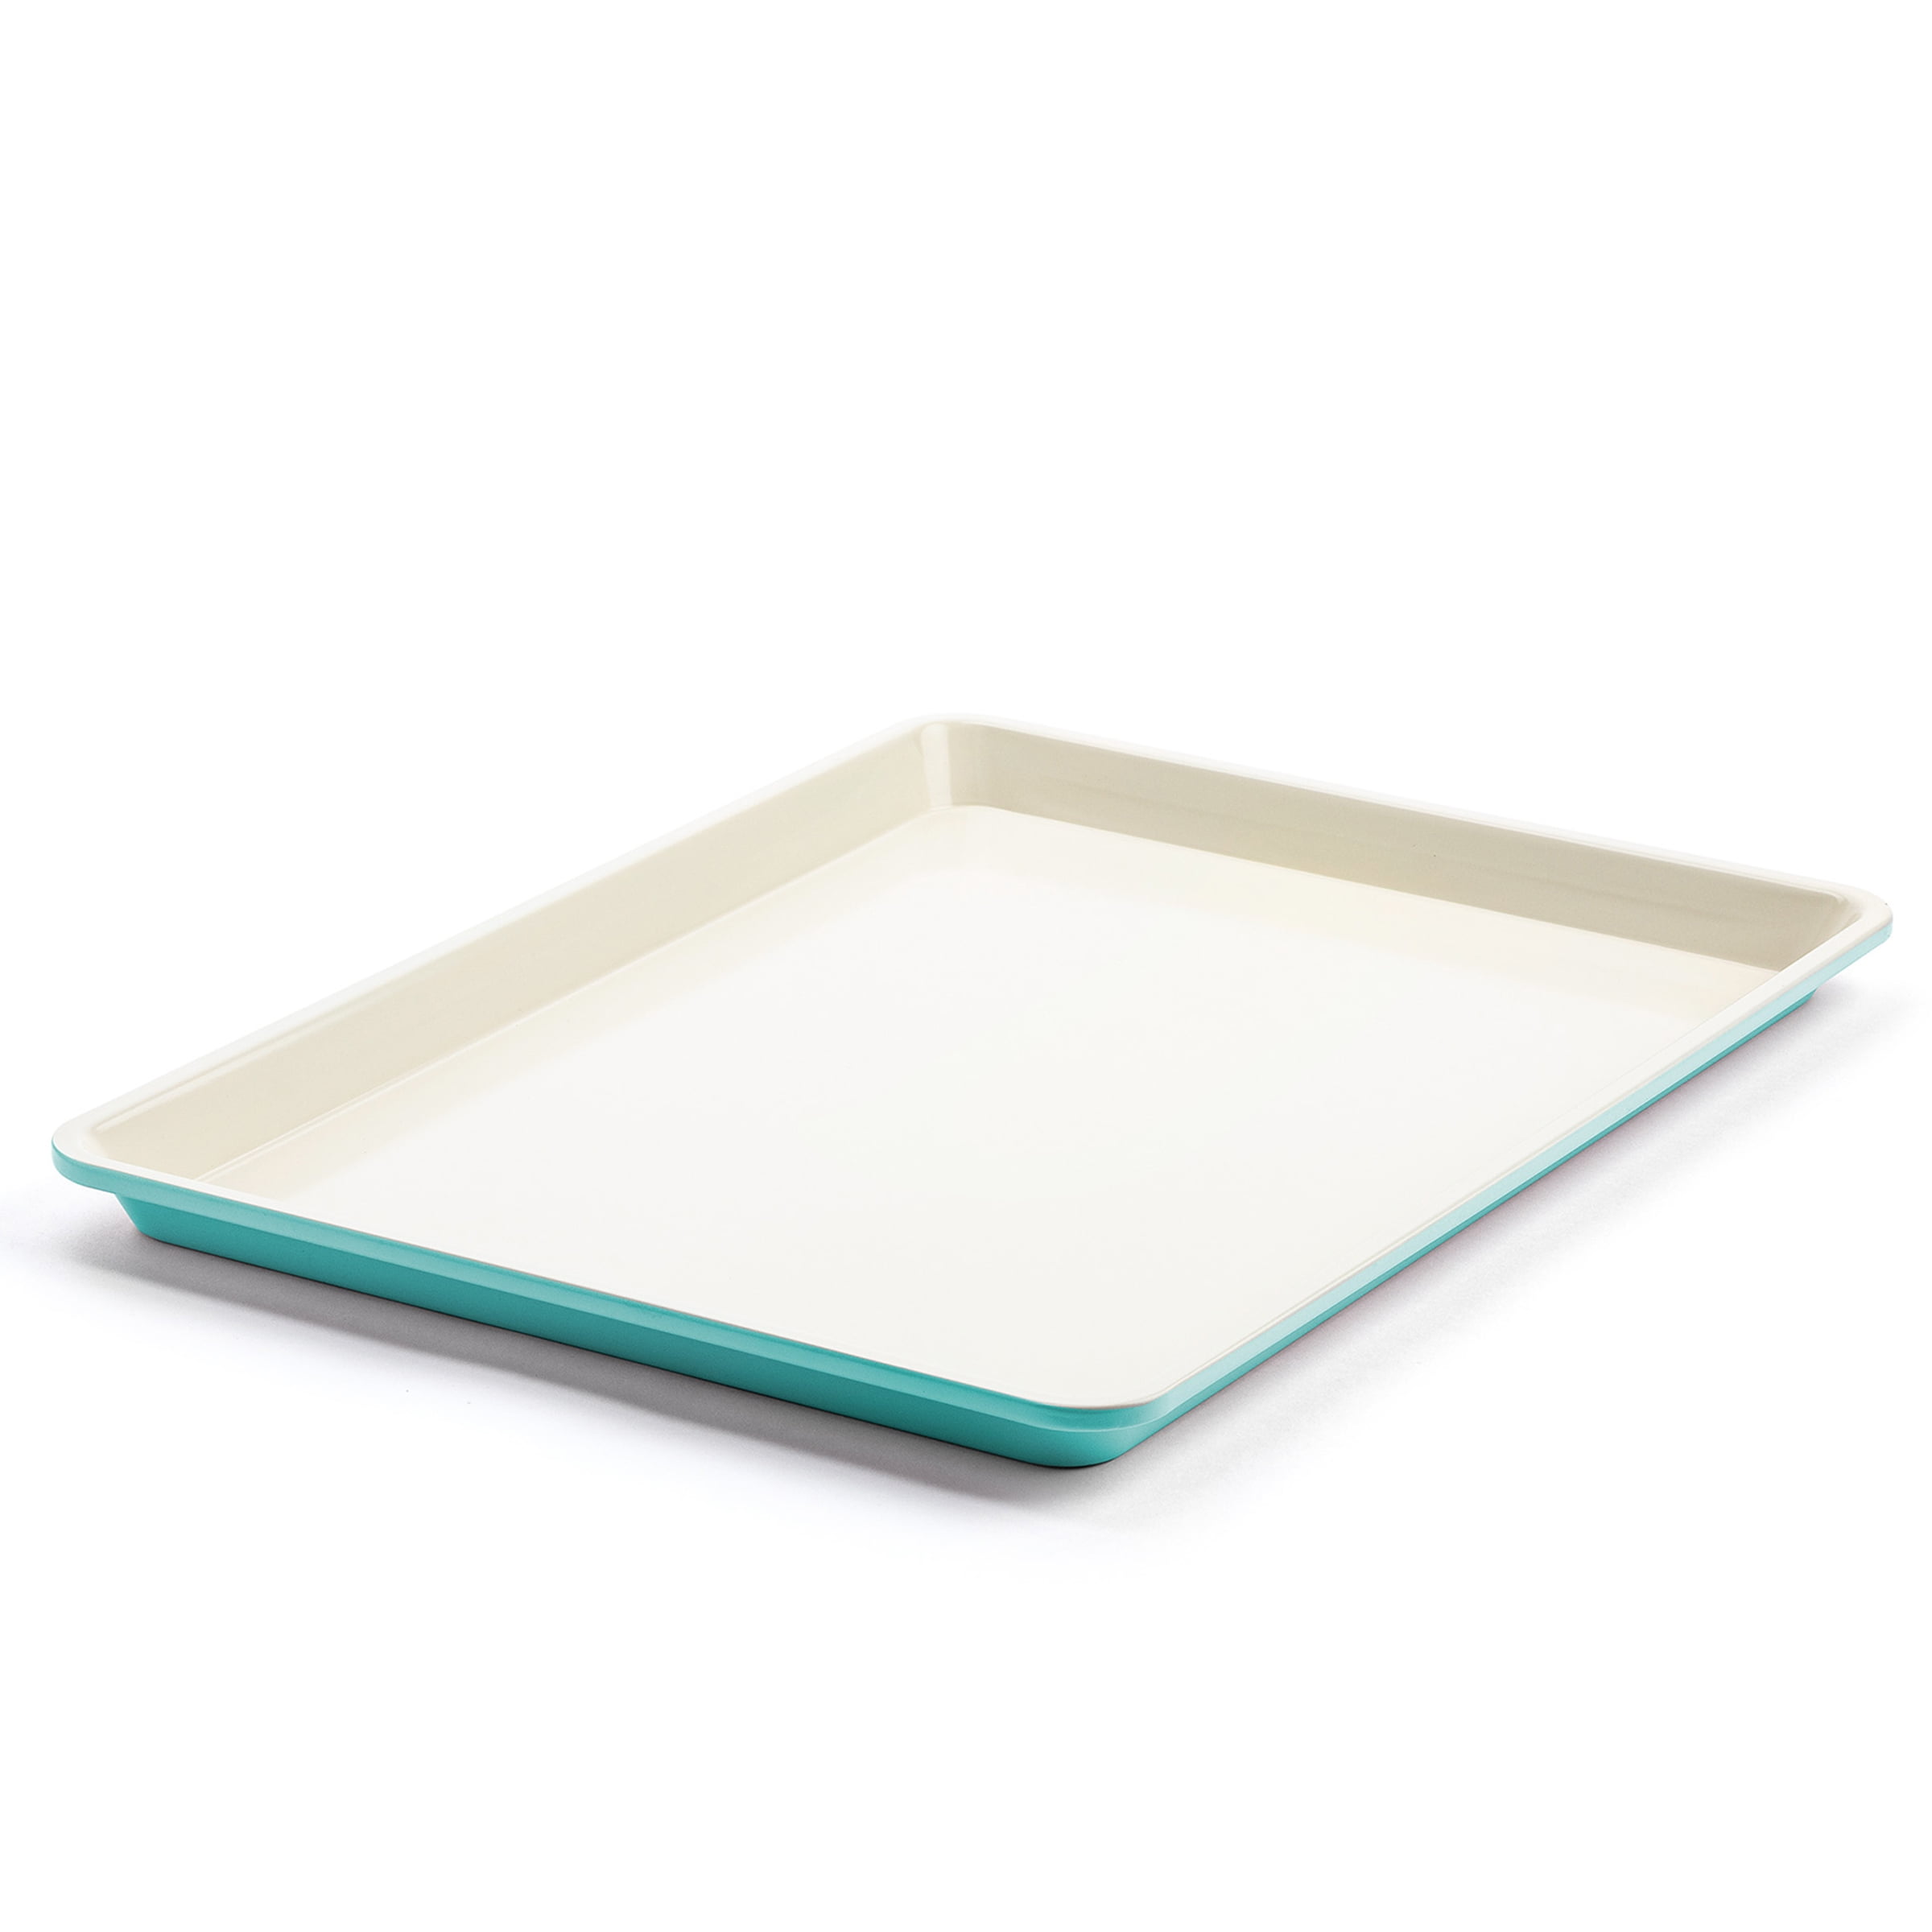 GreenLife Bakeware Healthy Ceramic Nonstick 18.5 x 13.5 Half Cookie Sheet  Baking Pan, PFAS-Free, Turquoise